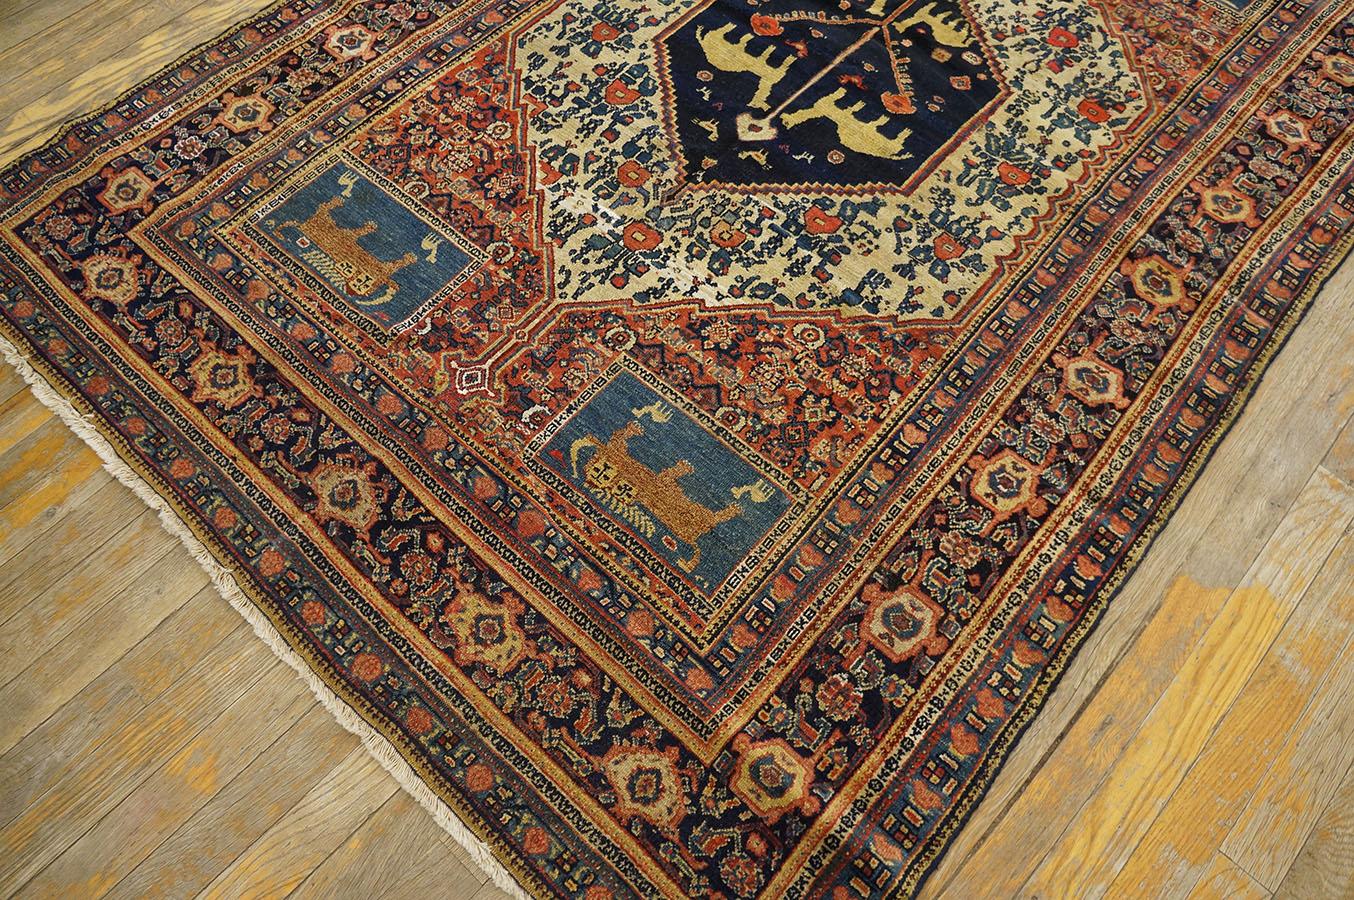  19th Century W. Persian Senneh Carpet ( 4'8'' x 6'6'' - 142 x 198 ) For Sale 1